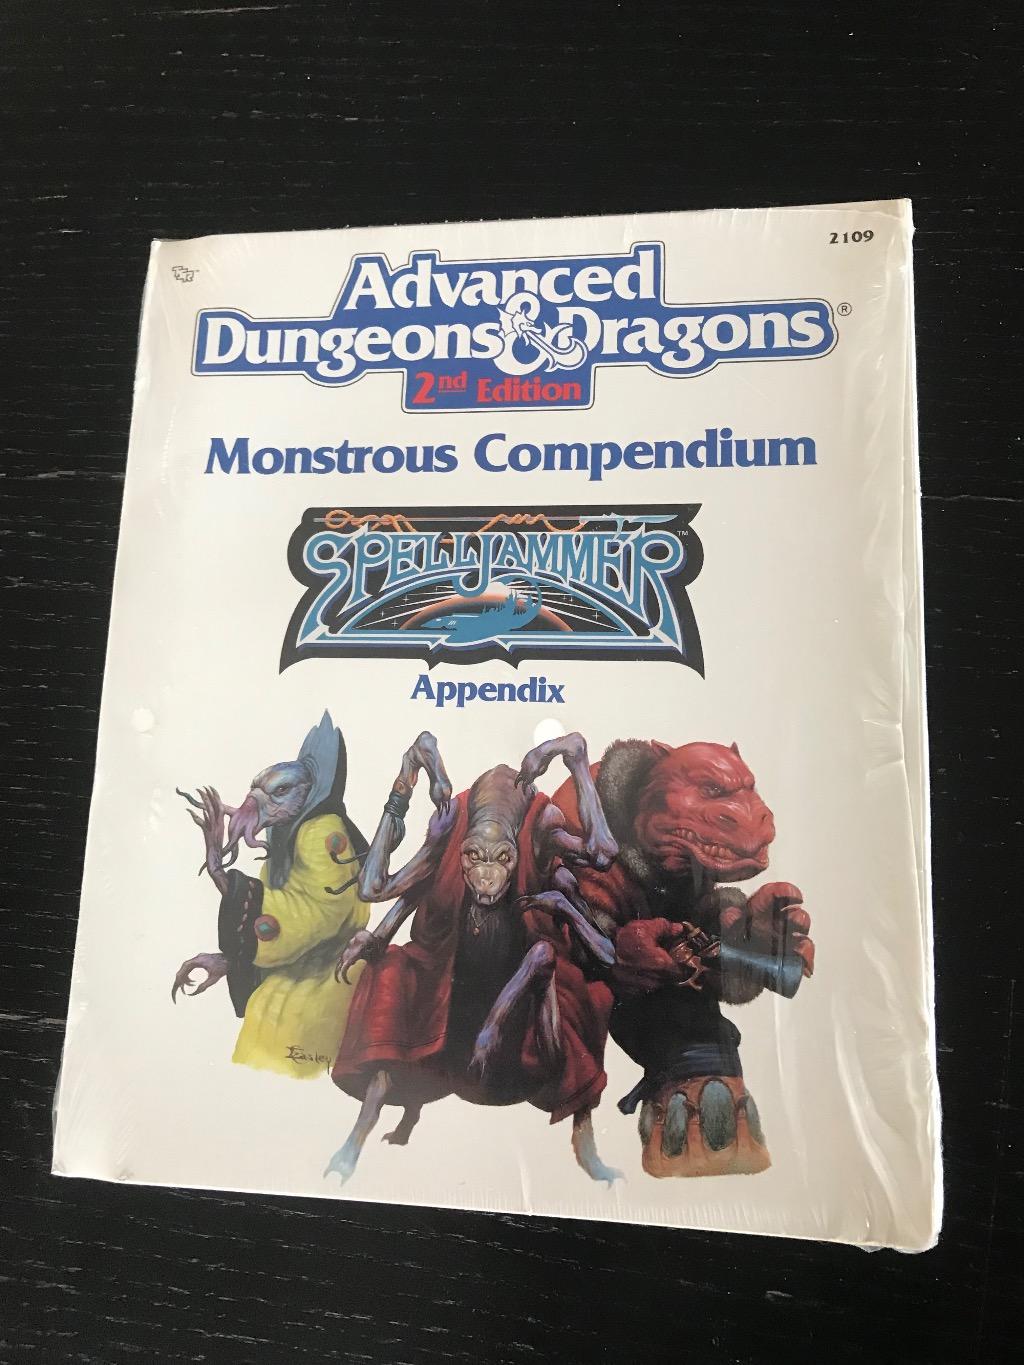 Advanced Dungeons & Dragons - 2nd Edition - Mc7 - Monstrous Compendium - Spelljammer Appendix